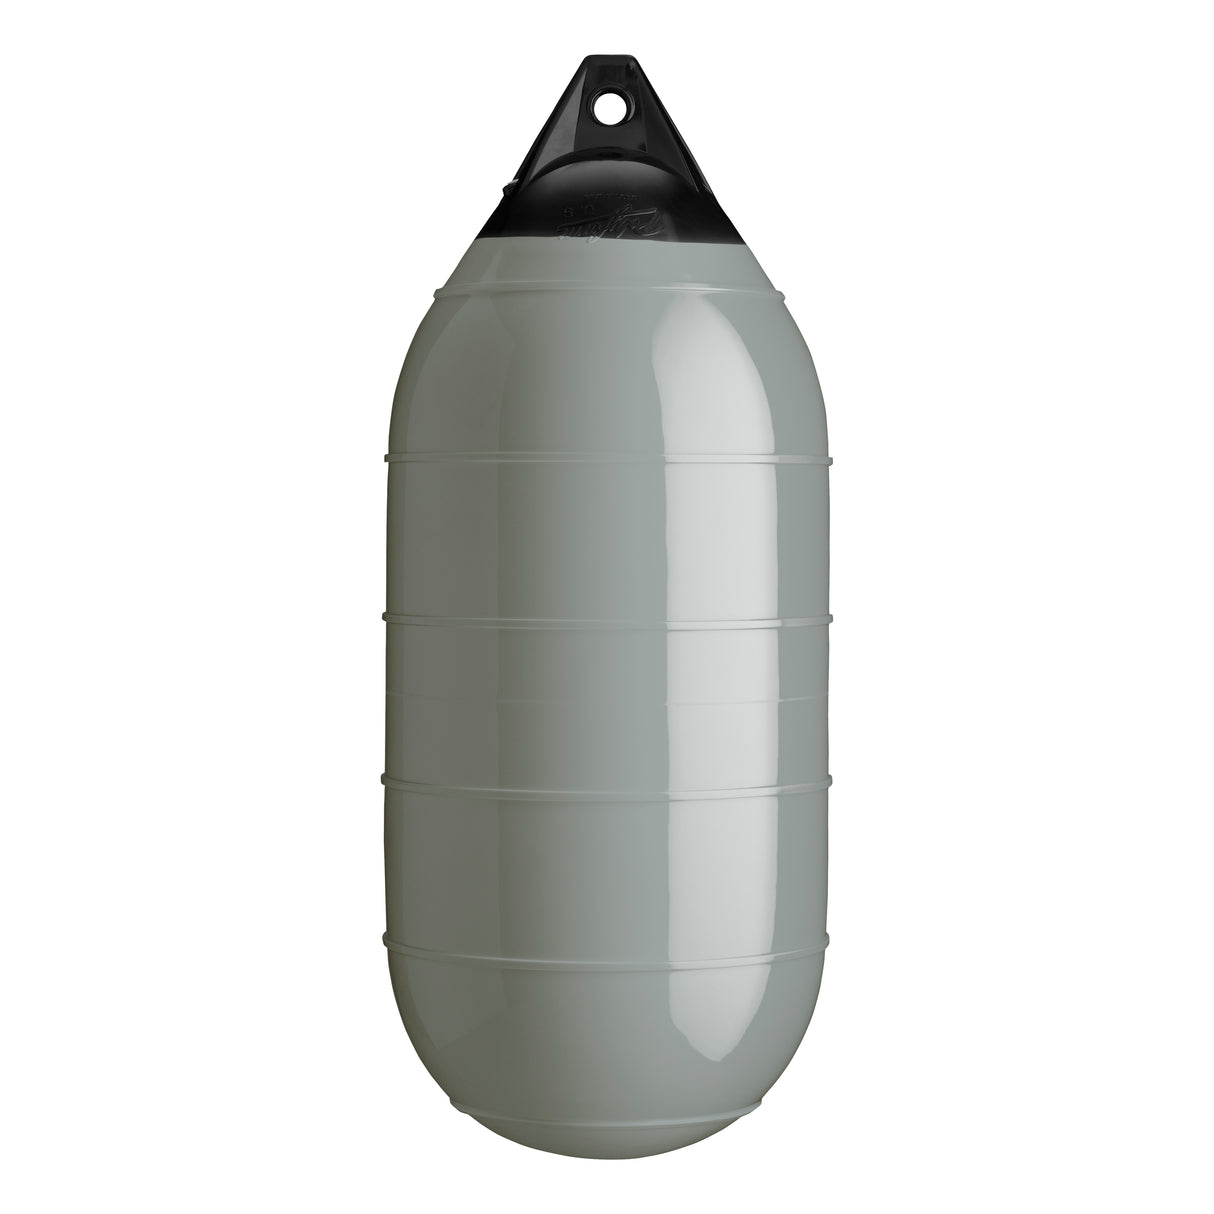 Grey low drag buoy with Black-Top, Polyform LD-4 